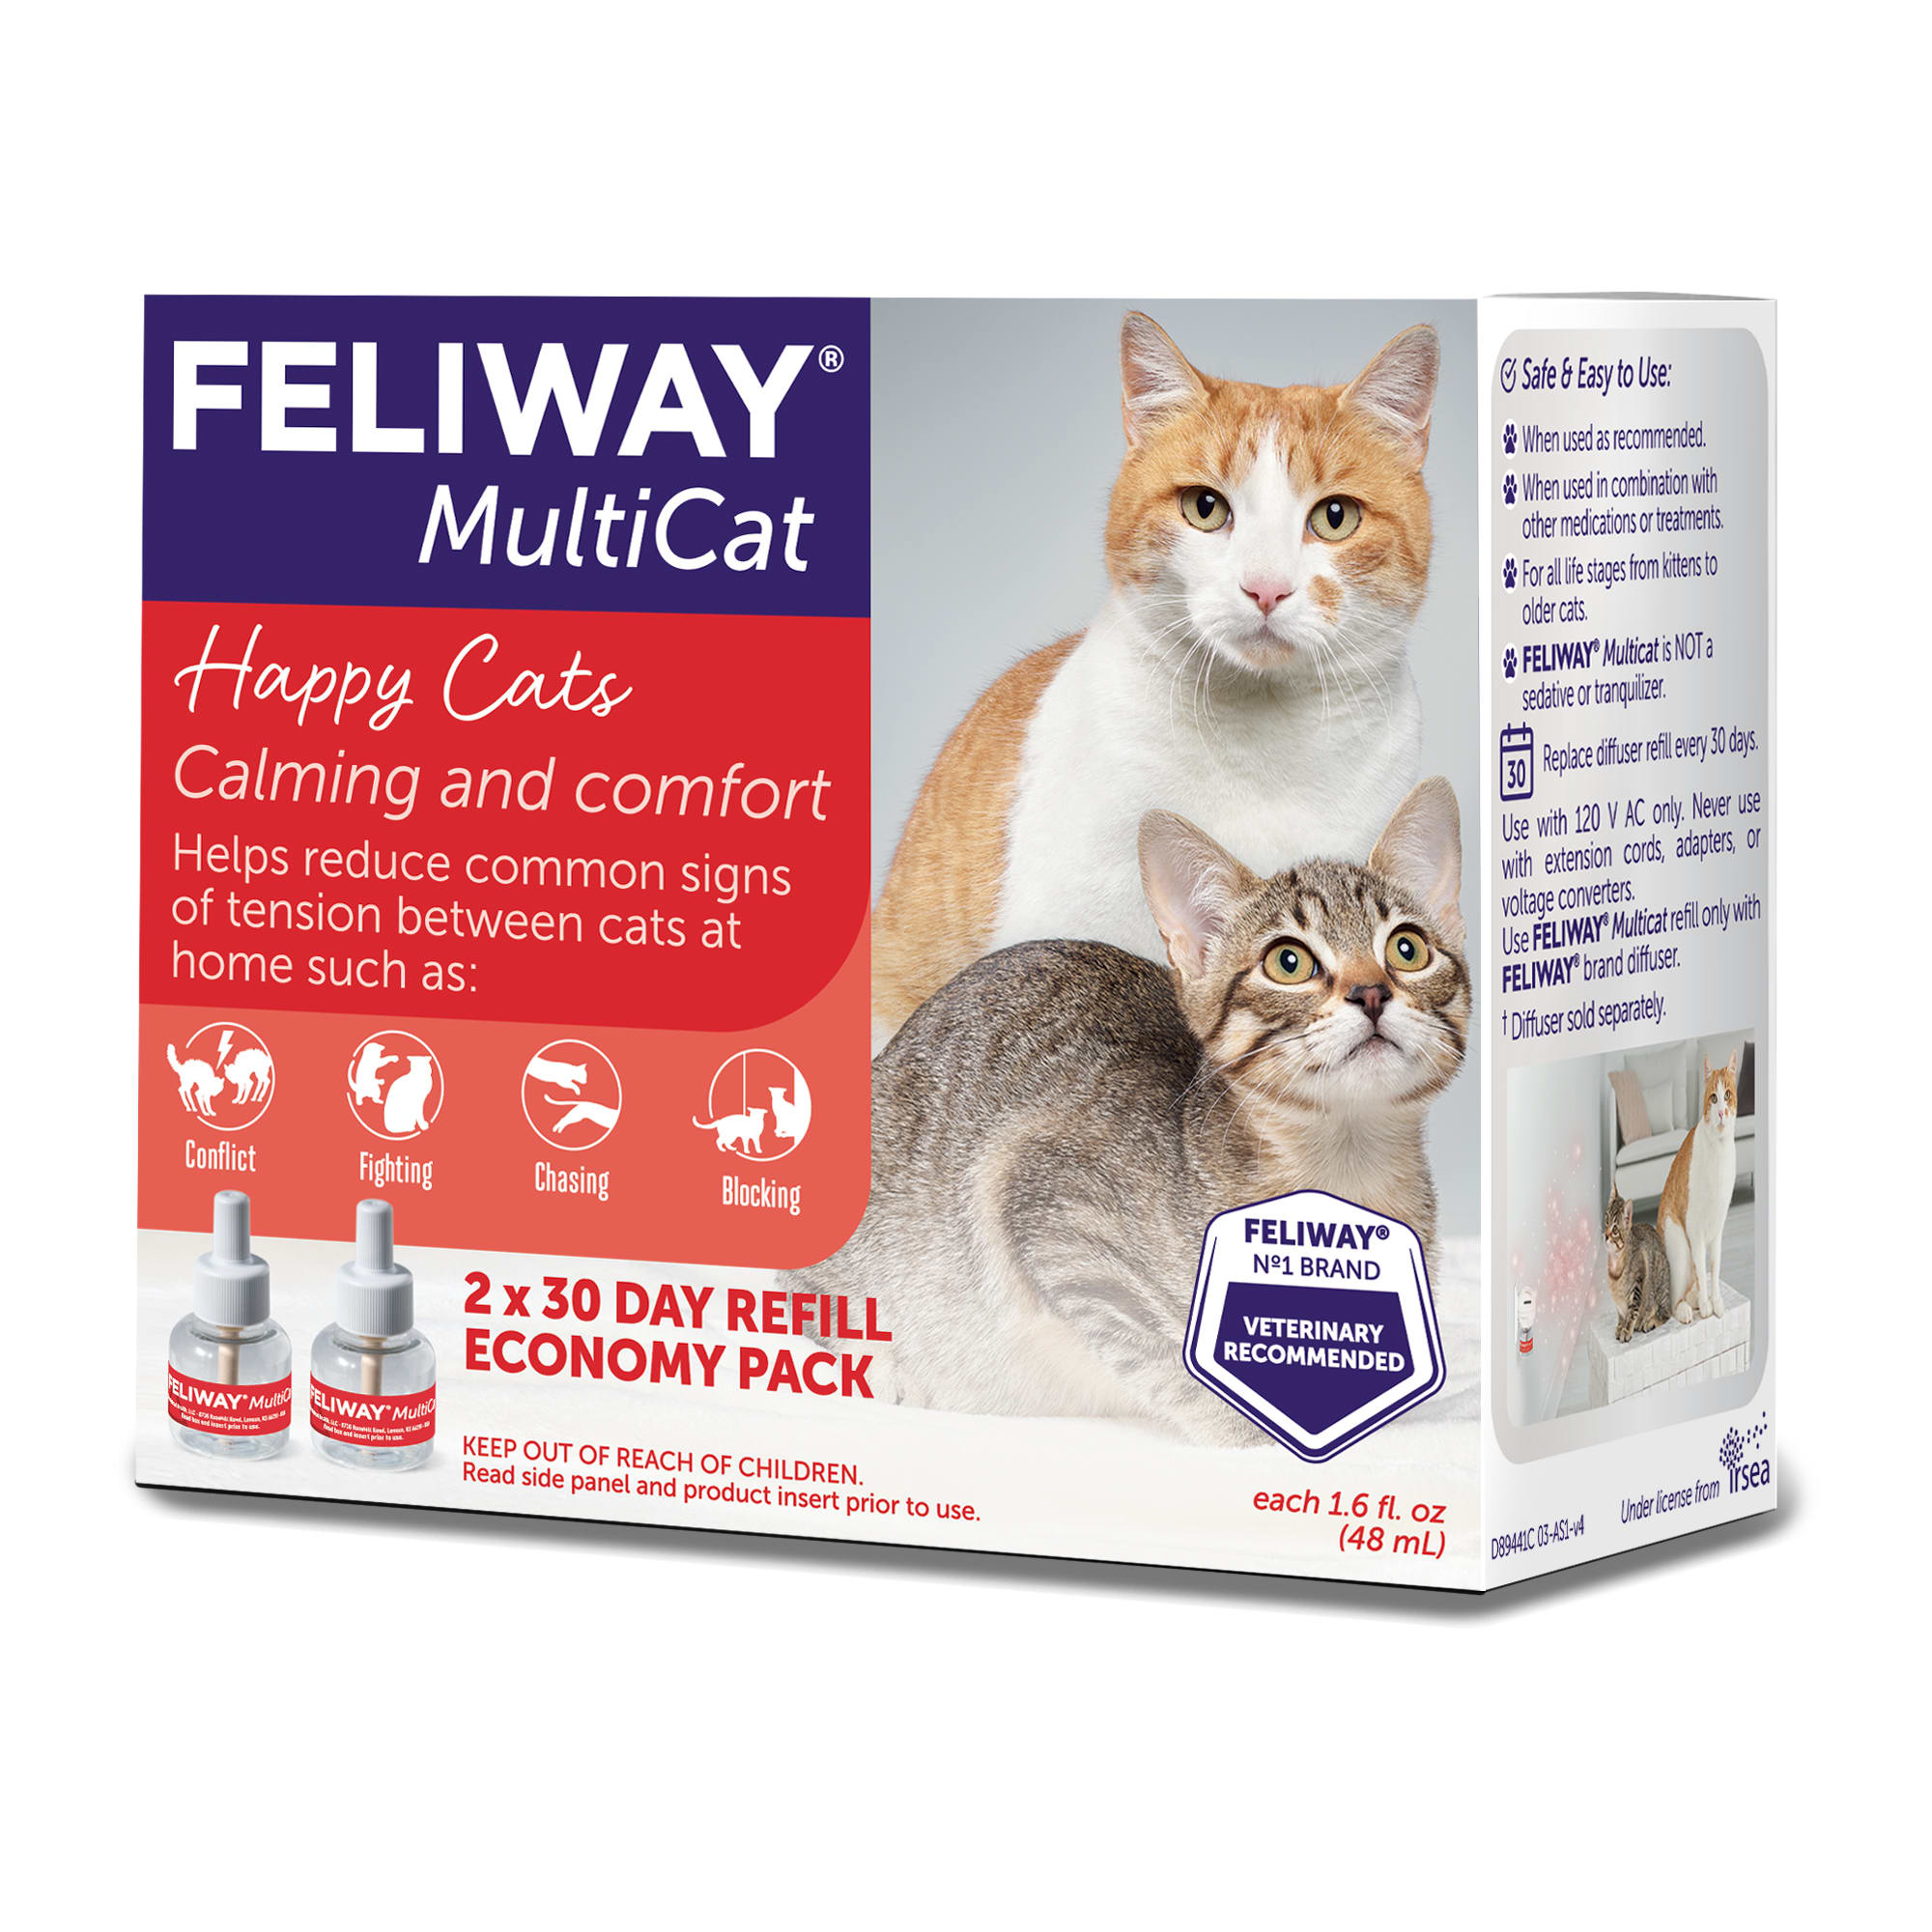 The Cat Connection Feliway Comfort Zone Spray